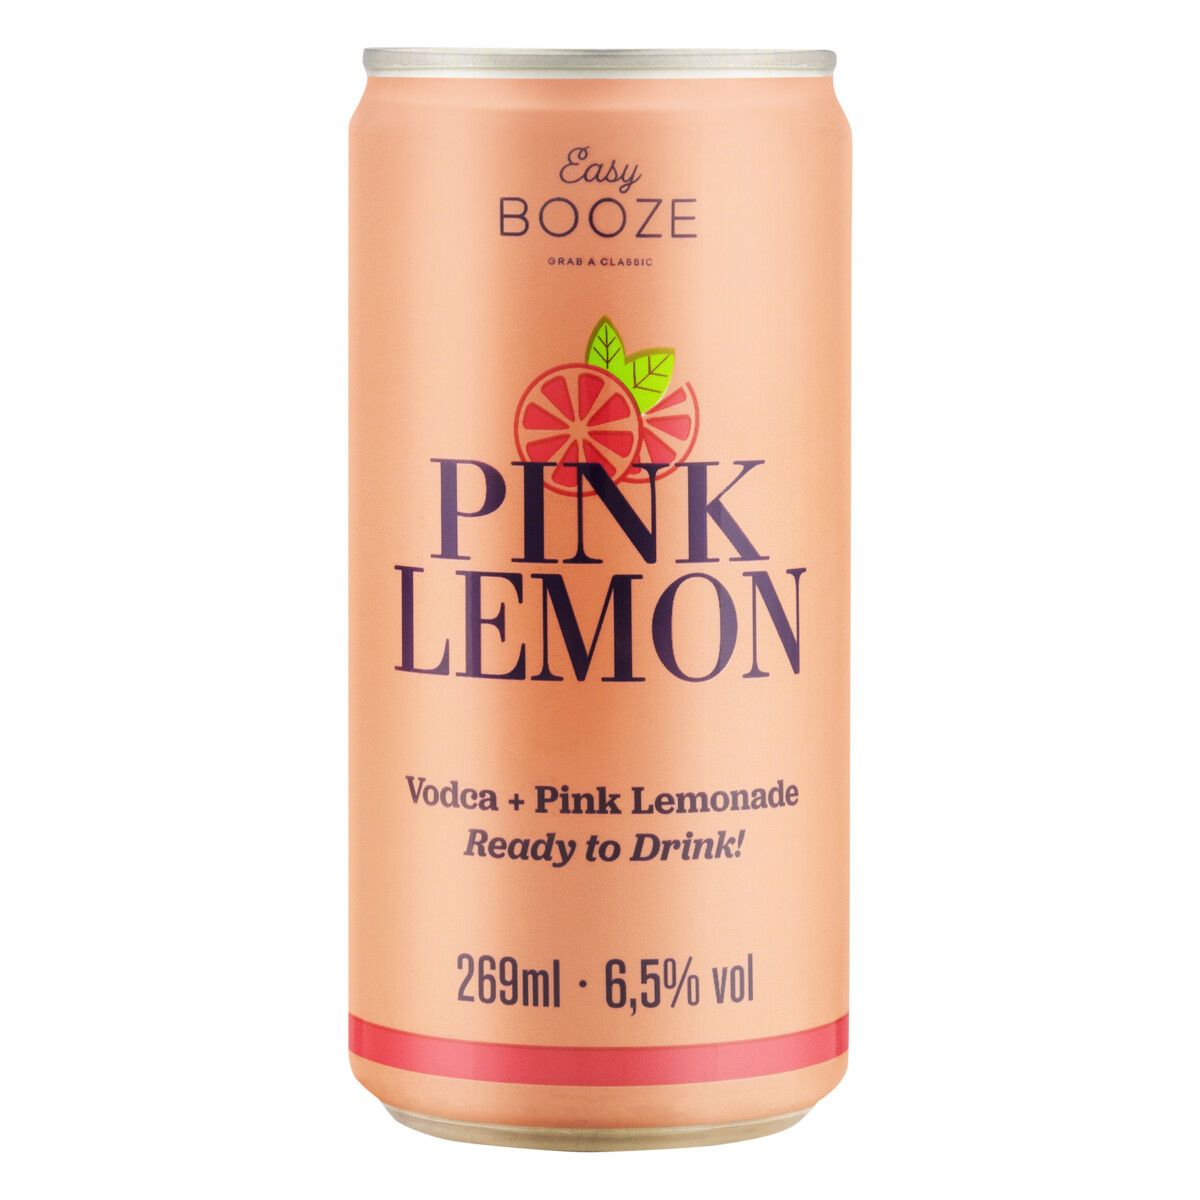 Bebida Mista Alcoólica Gaseificada Vodca + Pink Lemonade Easy Booze Lata 269ml